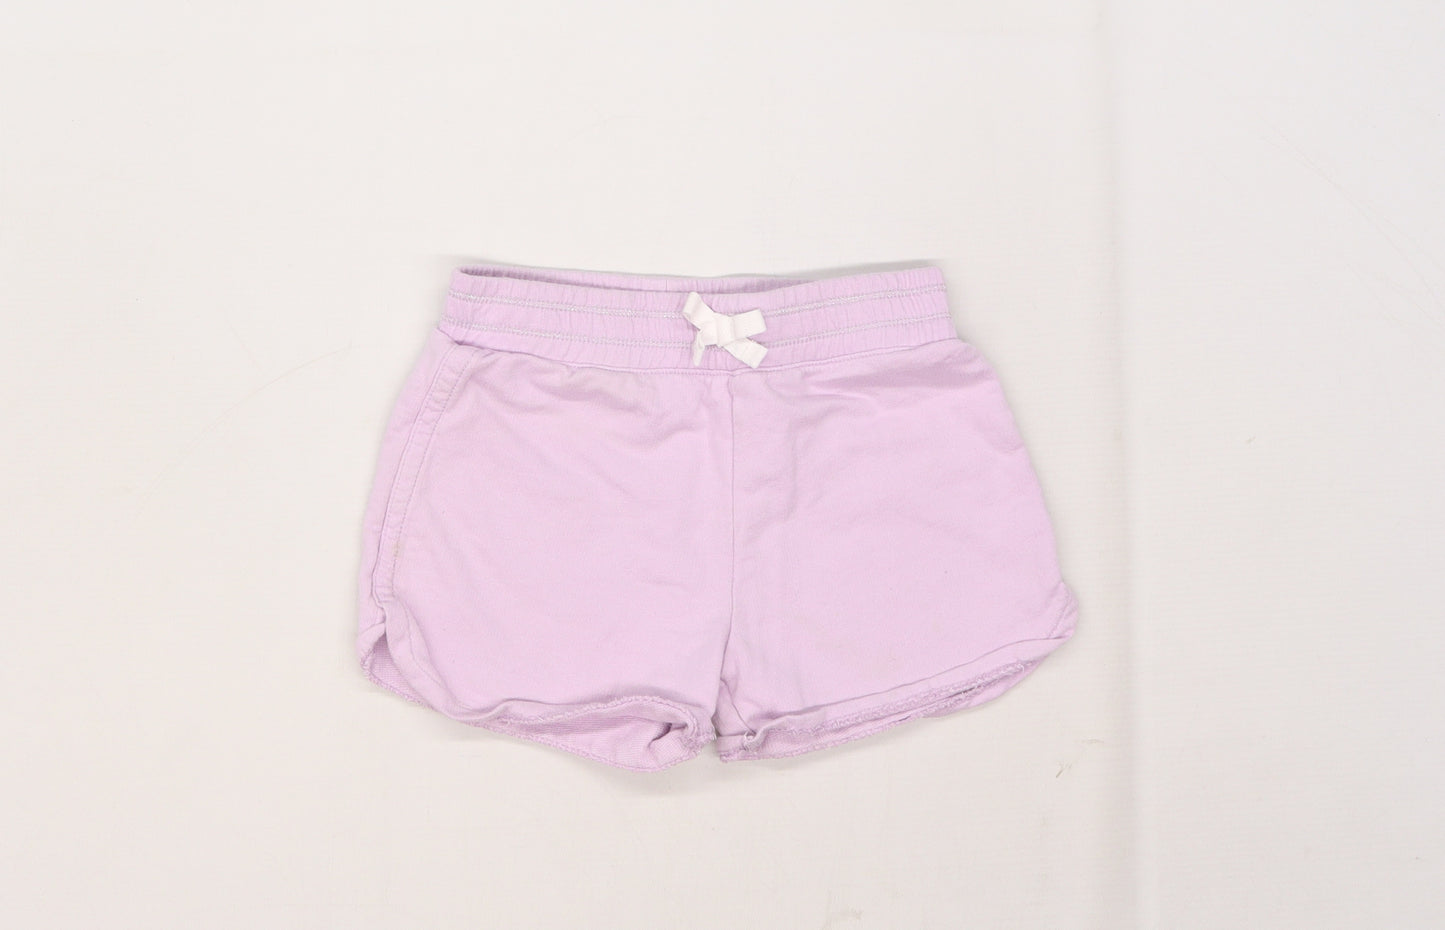 George Girls Purple   Sweat Shorts Size 5-6 Years